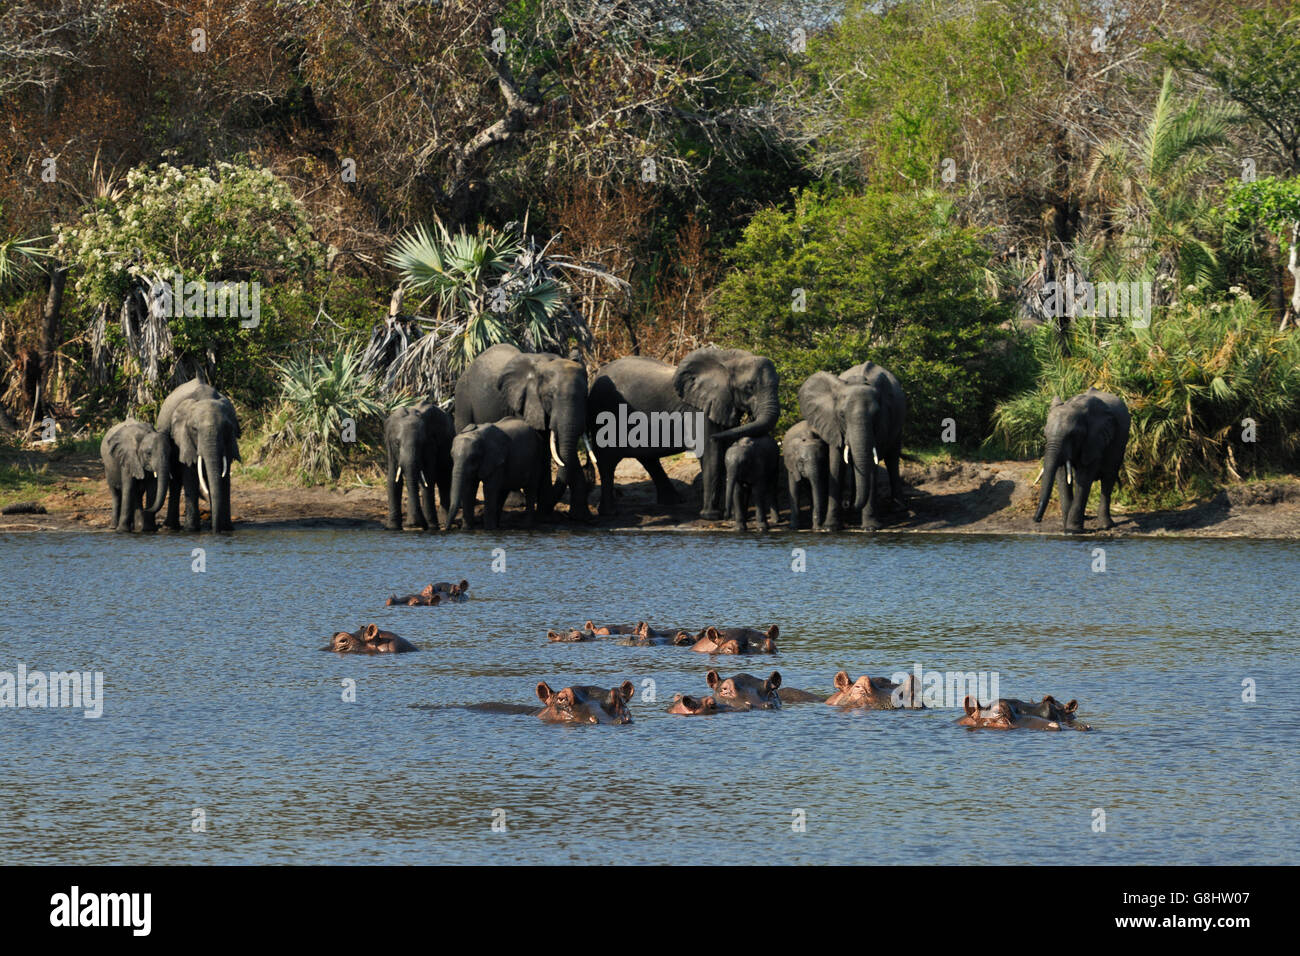 Elephants on river bank with hippos, Tembe Elephant Park, Maputaland, KwaZulu Natal, South Africa. Stock Photo